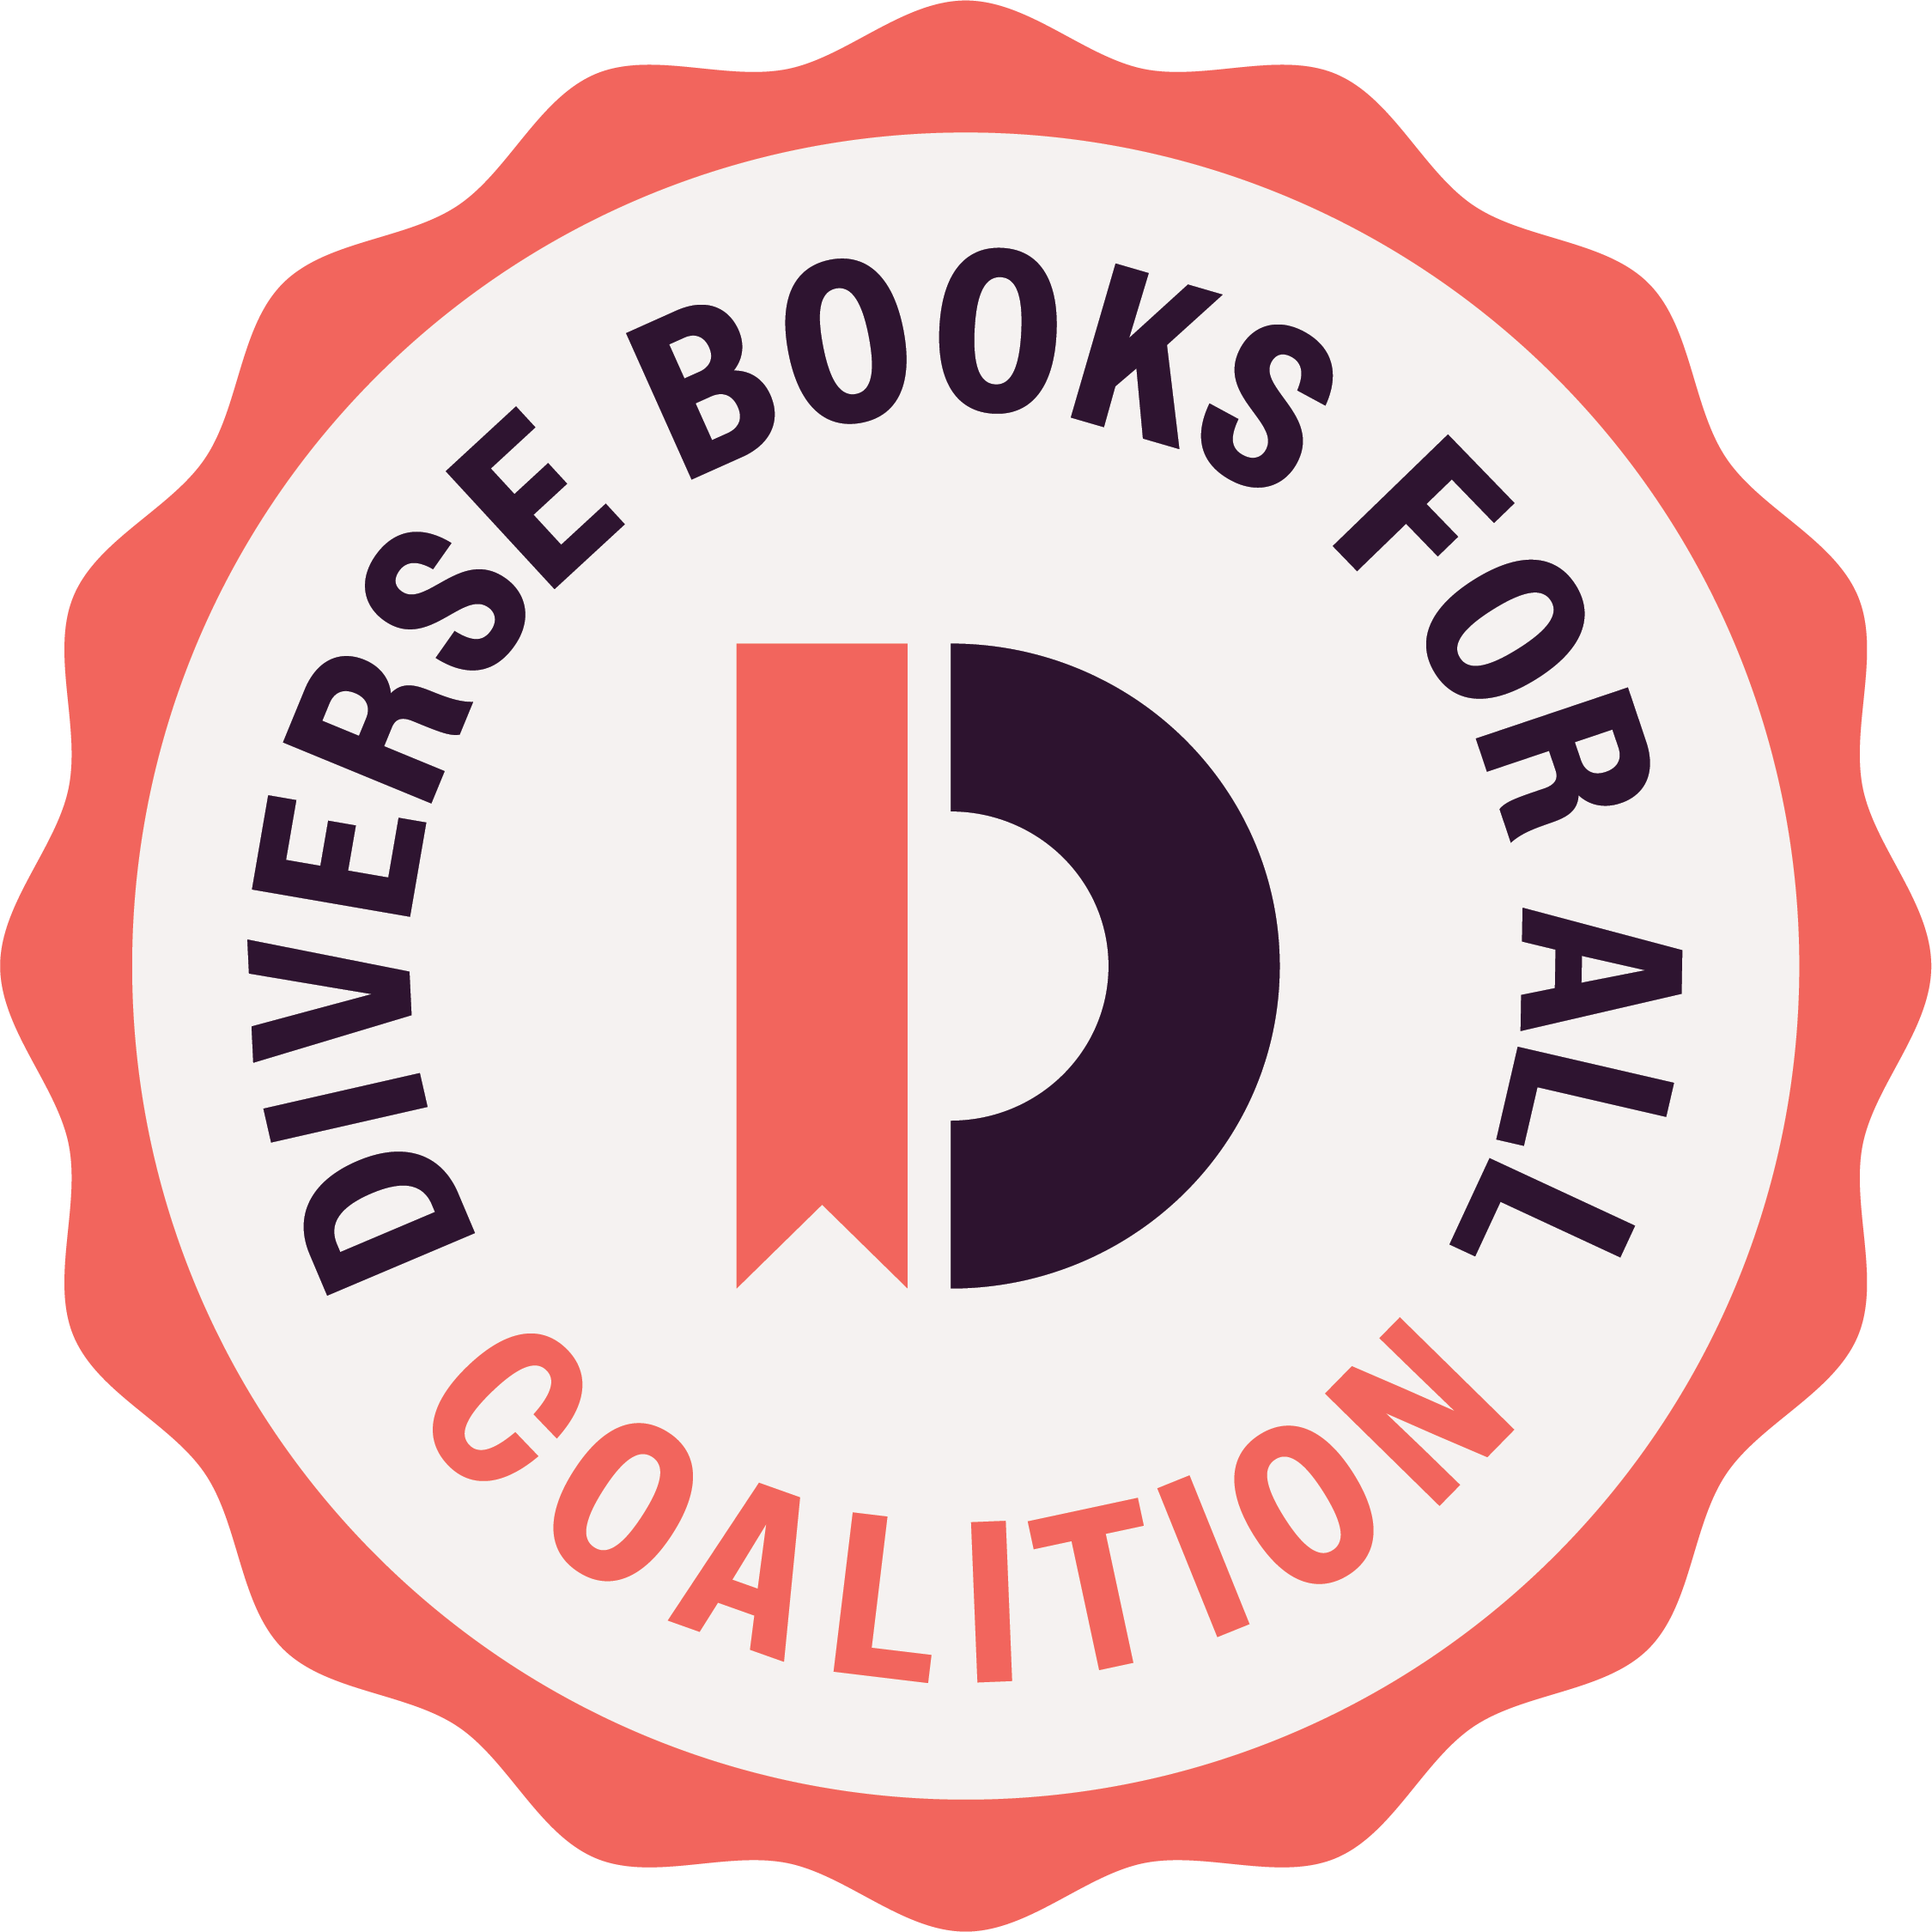 The Campaign for Grade-Level Reading Logo in purple